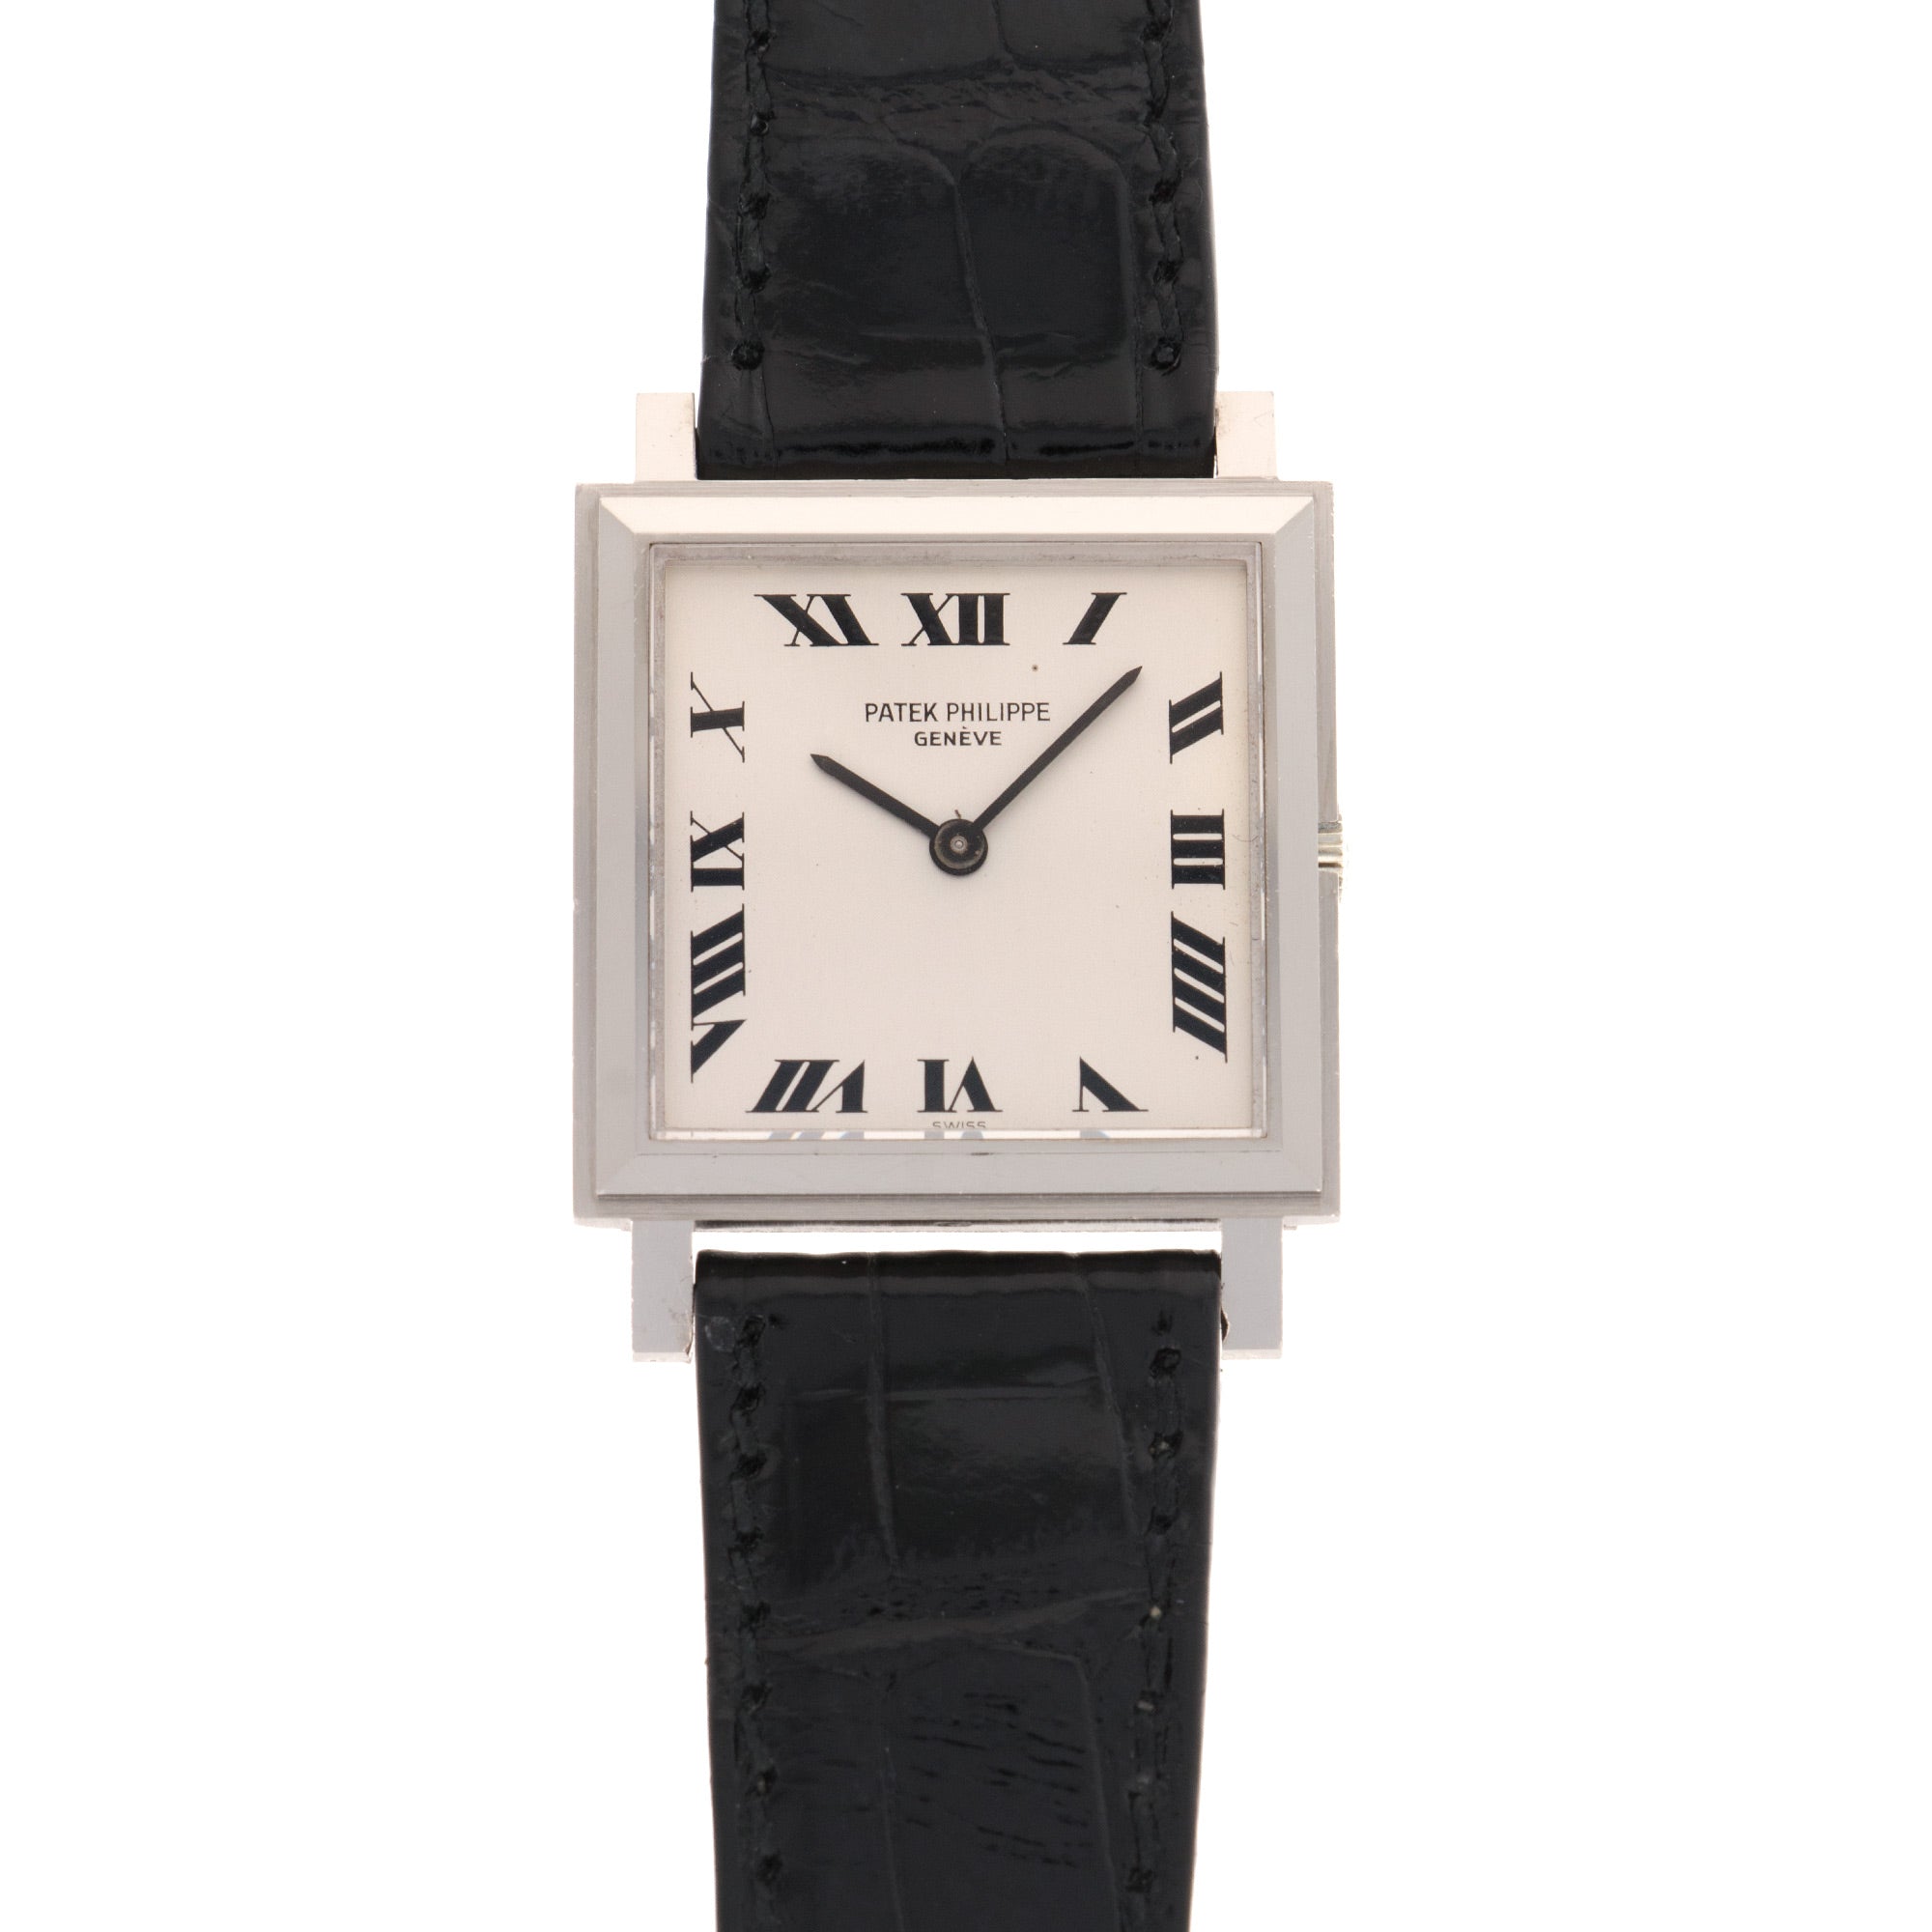 Patek Philippe - Patek Philippe White Gold Square Watch Ref. 3490 - The Keystone Watches